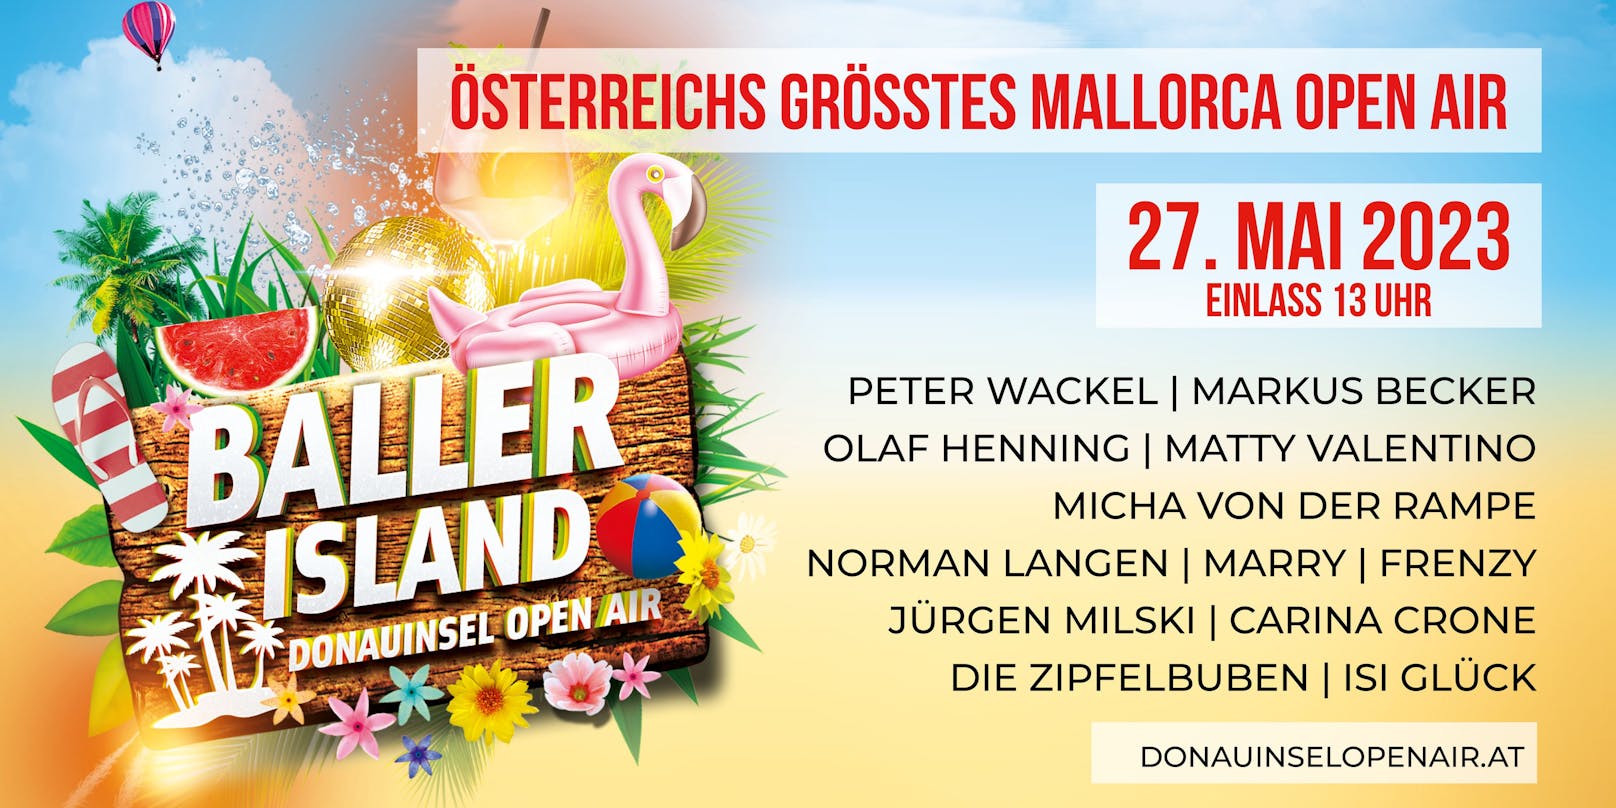 Baller Island - das größte Mallorca Open Air Festival Österreichs!